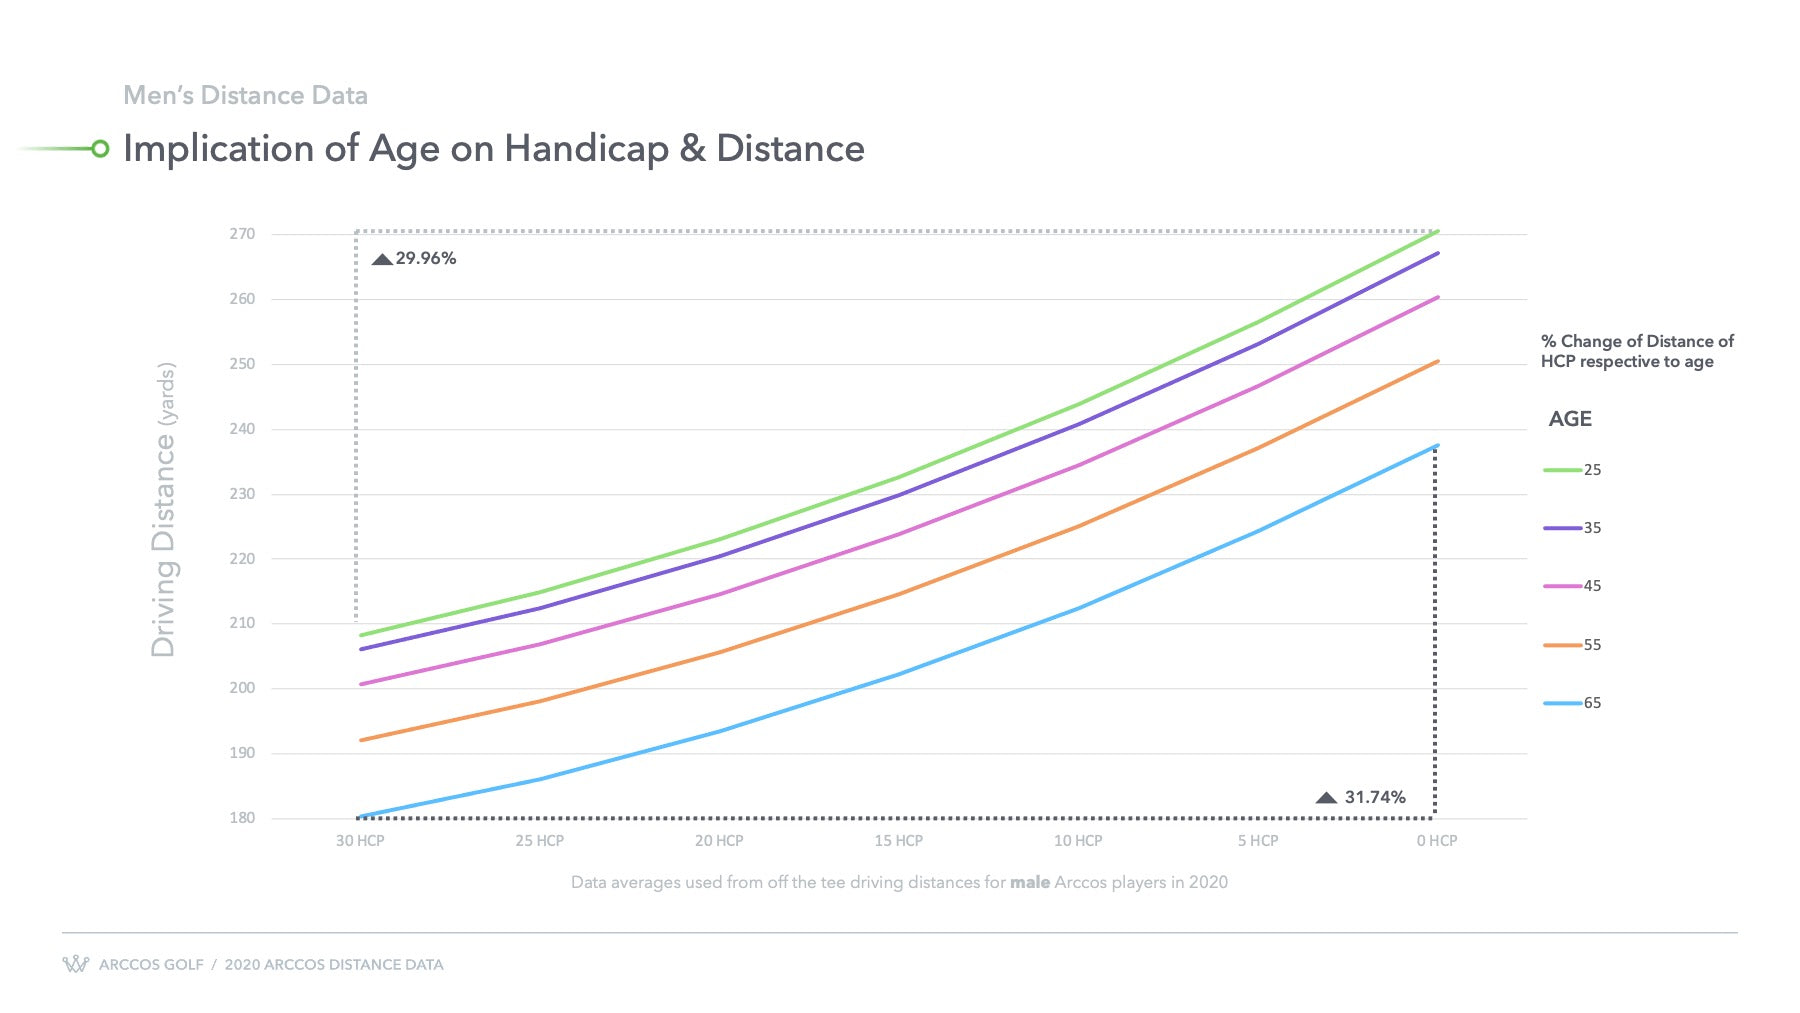 Men's Golf Driving Distance Data Averages